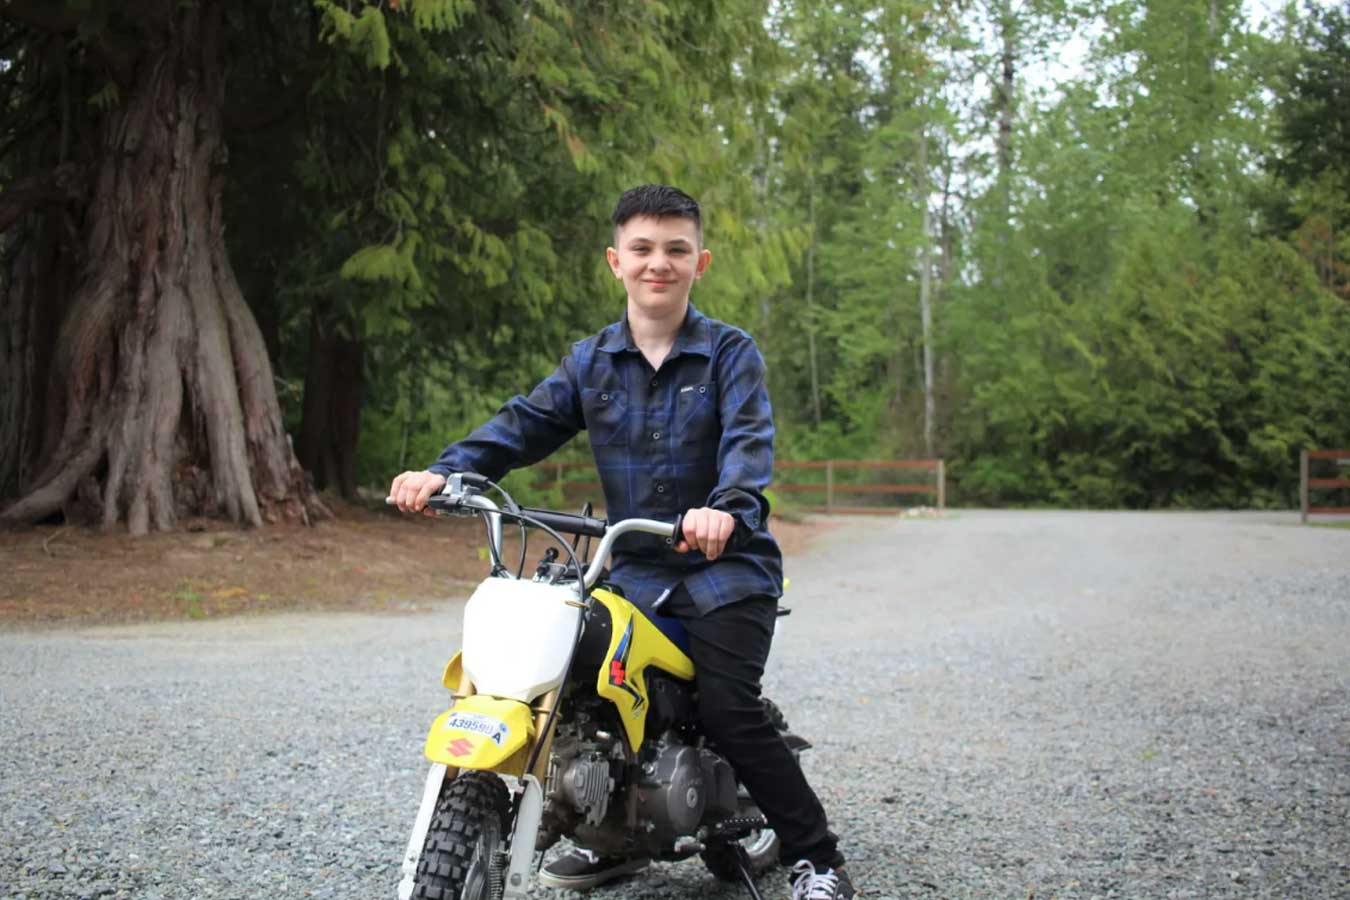 A teen on a dirt bike